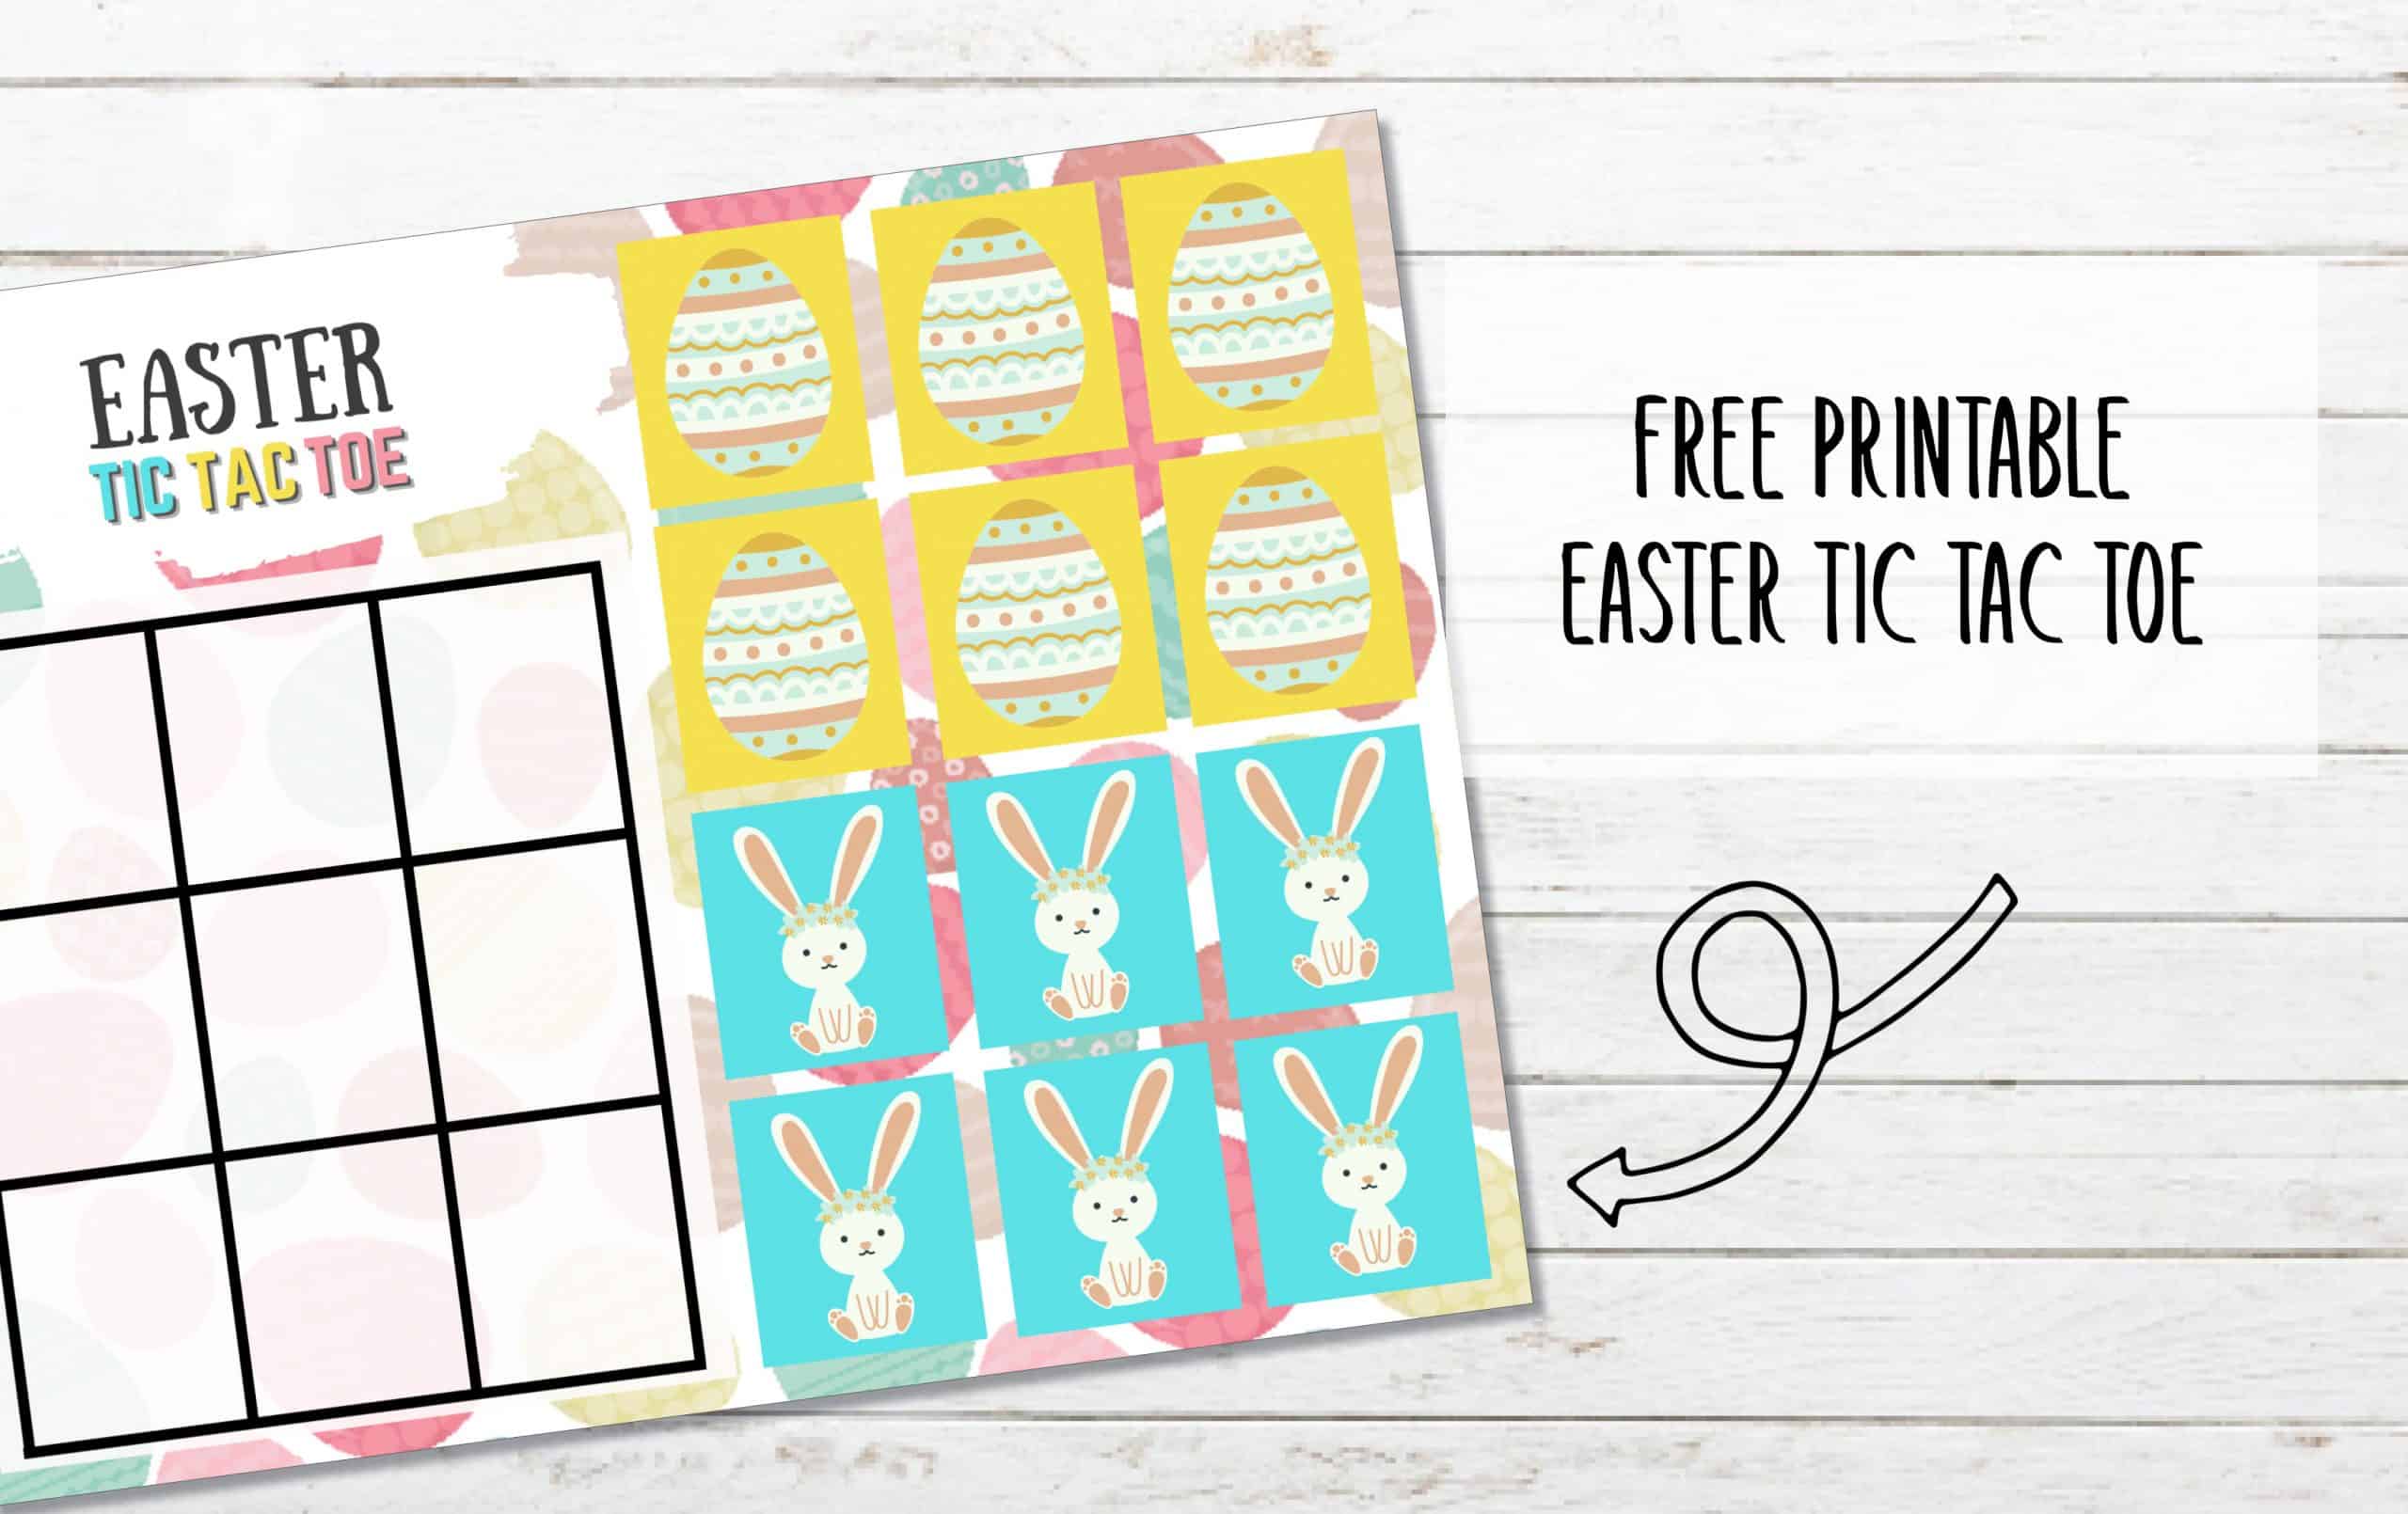 FREE Printable Easter tic tac toe